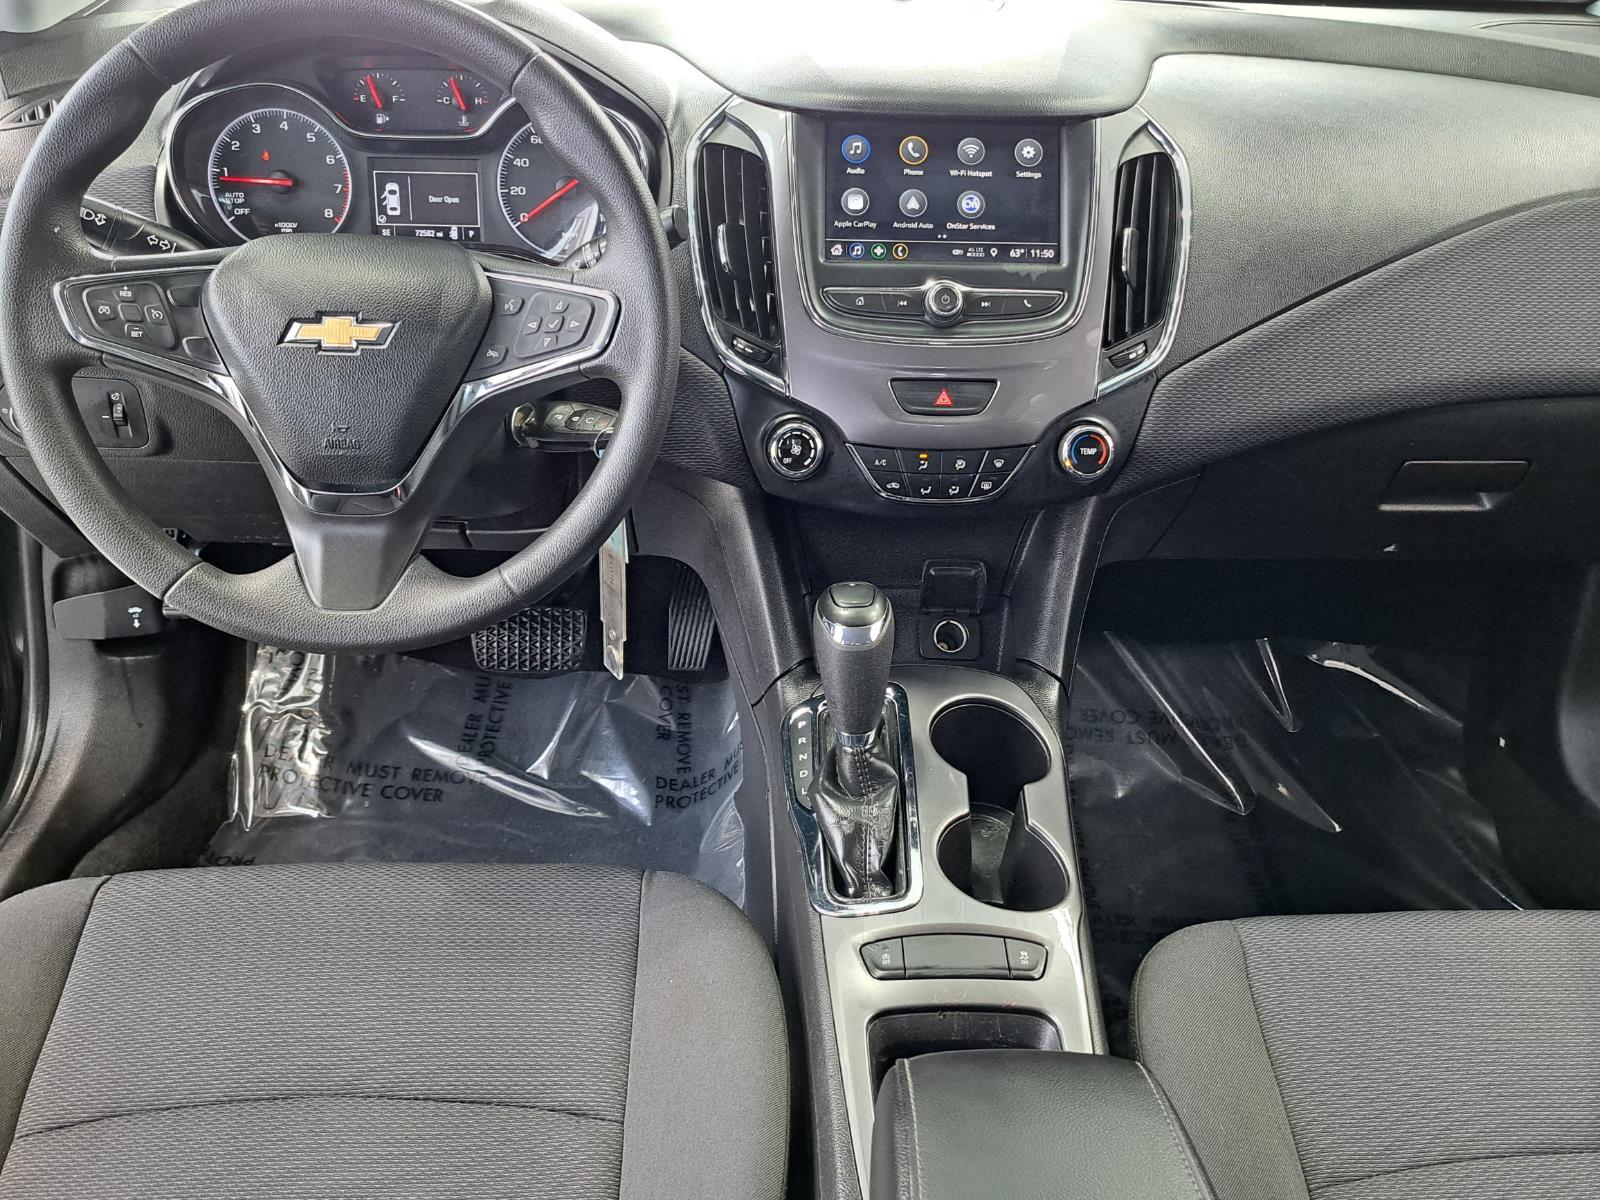 2019 Chevrolet Cruze LS Sedan 4 Dr. Front Wheel Drive 4